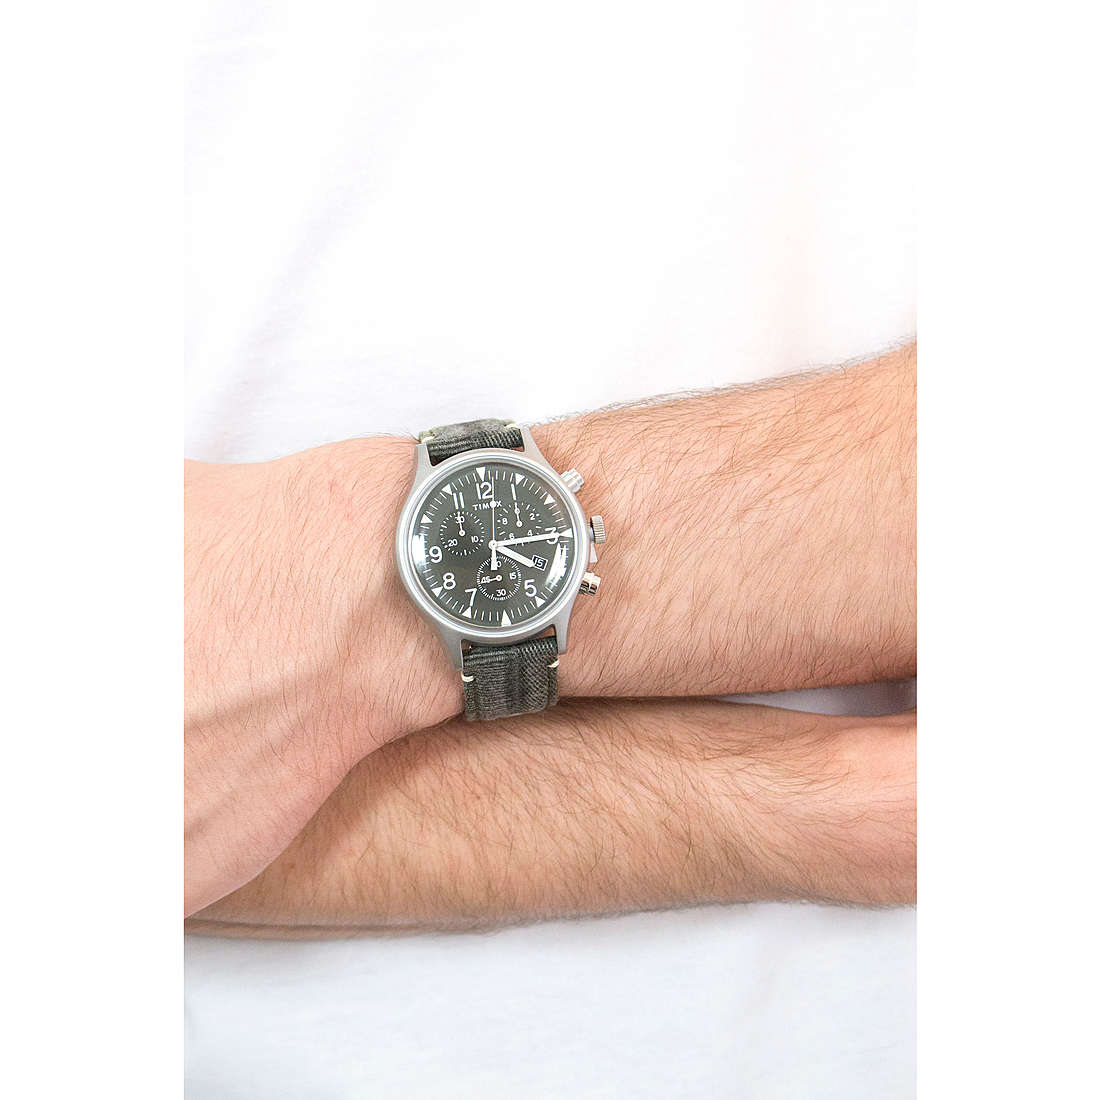 Timex chronographes Mk1 homme TW2R68600 Je porte